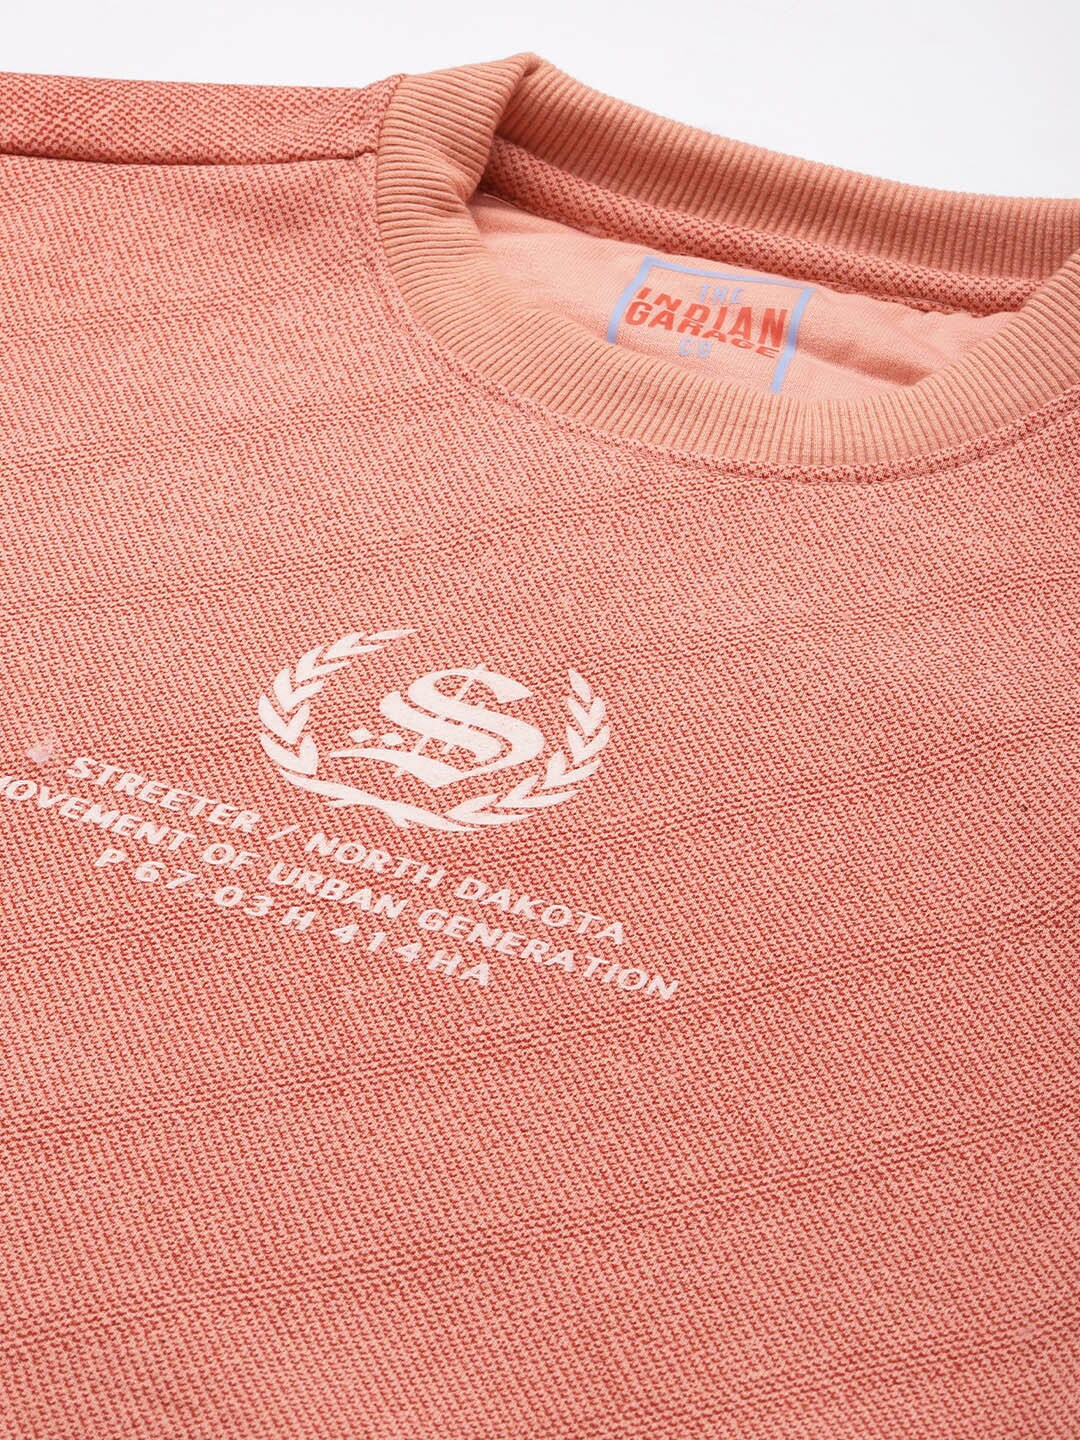 Shop Men Striped Sweatshirt Online.